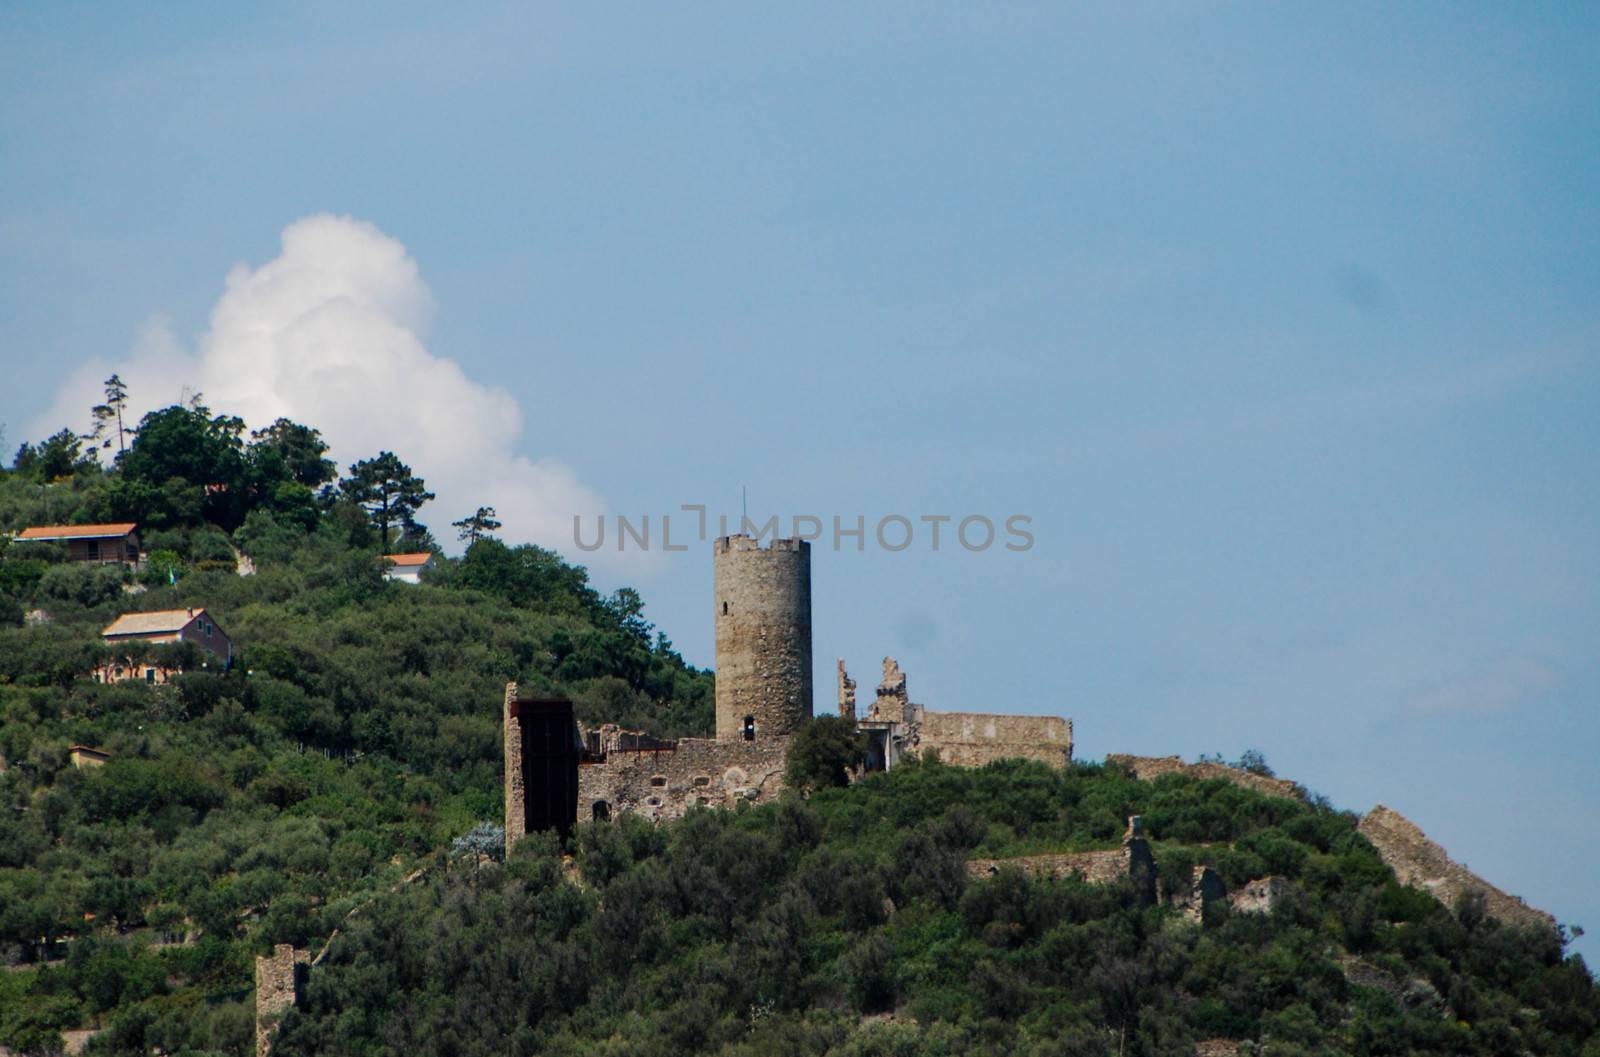 The Castle of Noli, Liguria - Italy